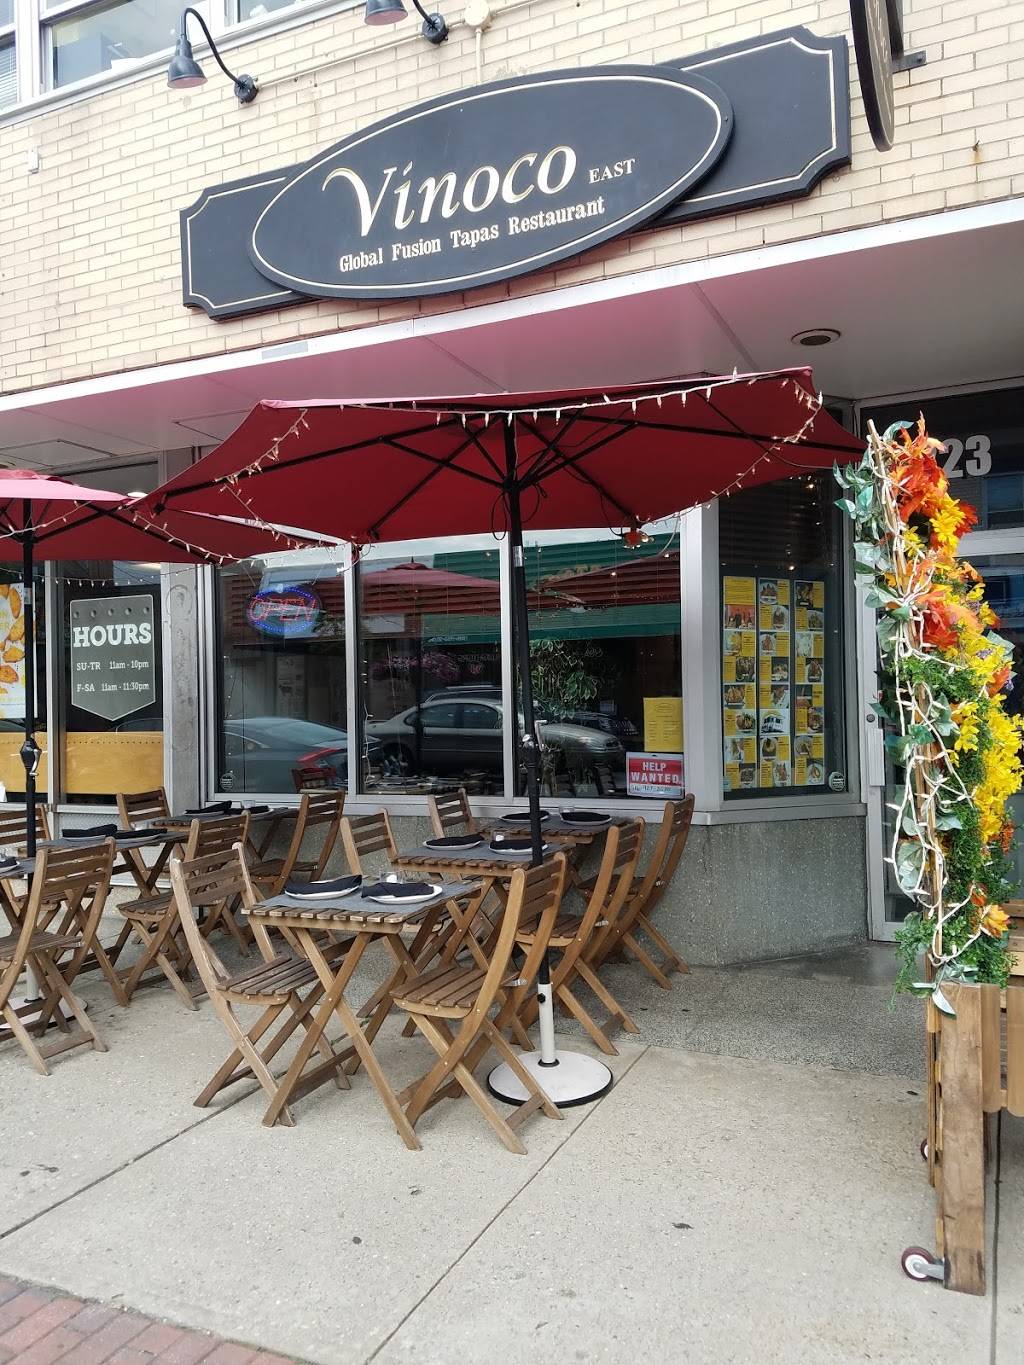 Vinoco East Global Fusion Tapas Restaurant | restaurant | 223 Main St, Farmingdale, NY 11735, USA | 5169278070 OR +1 516-927-8070